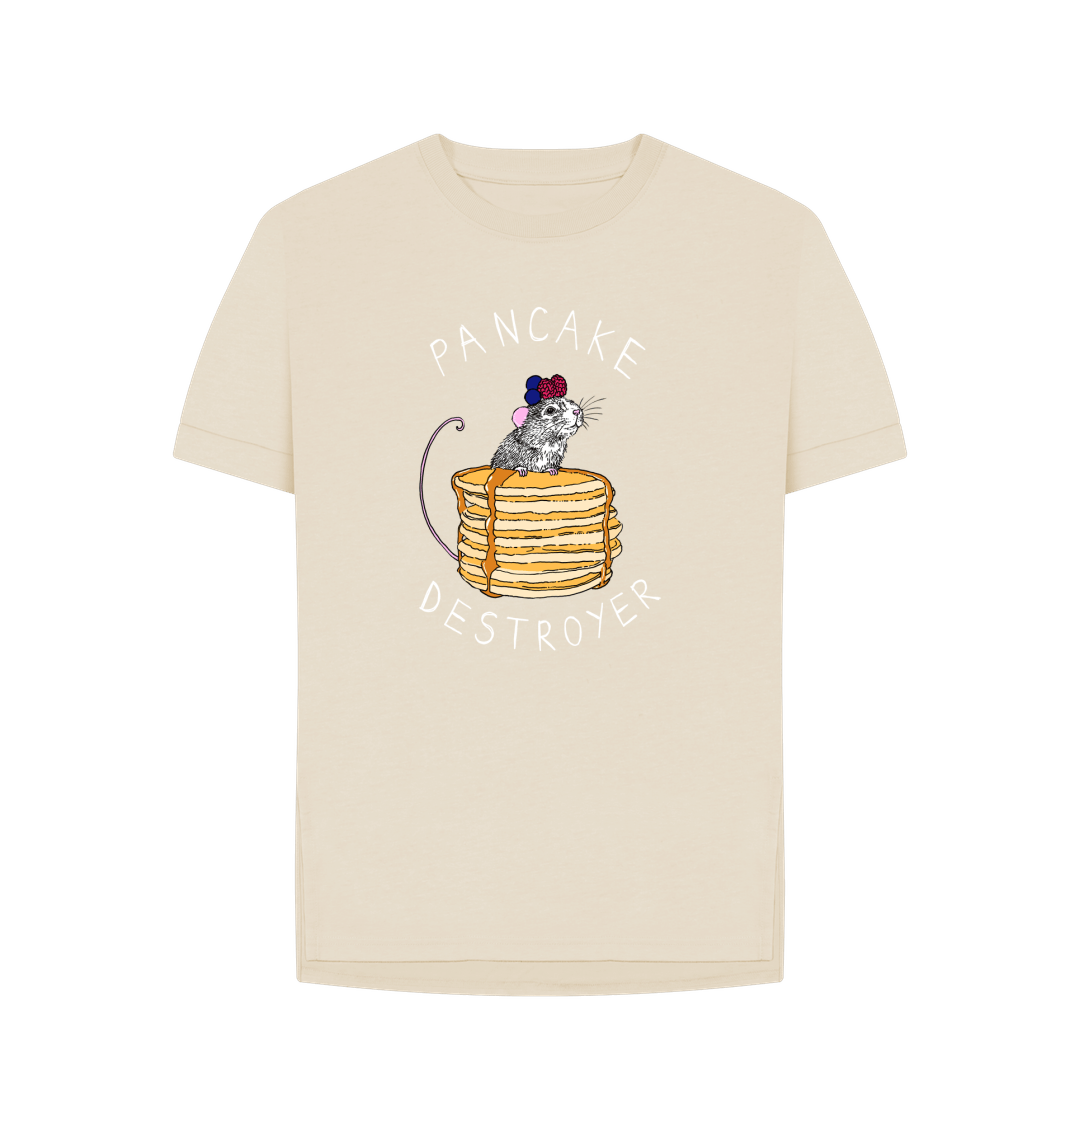 Oat 'Pancake Destroyer' Women's T-shirt